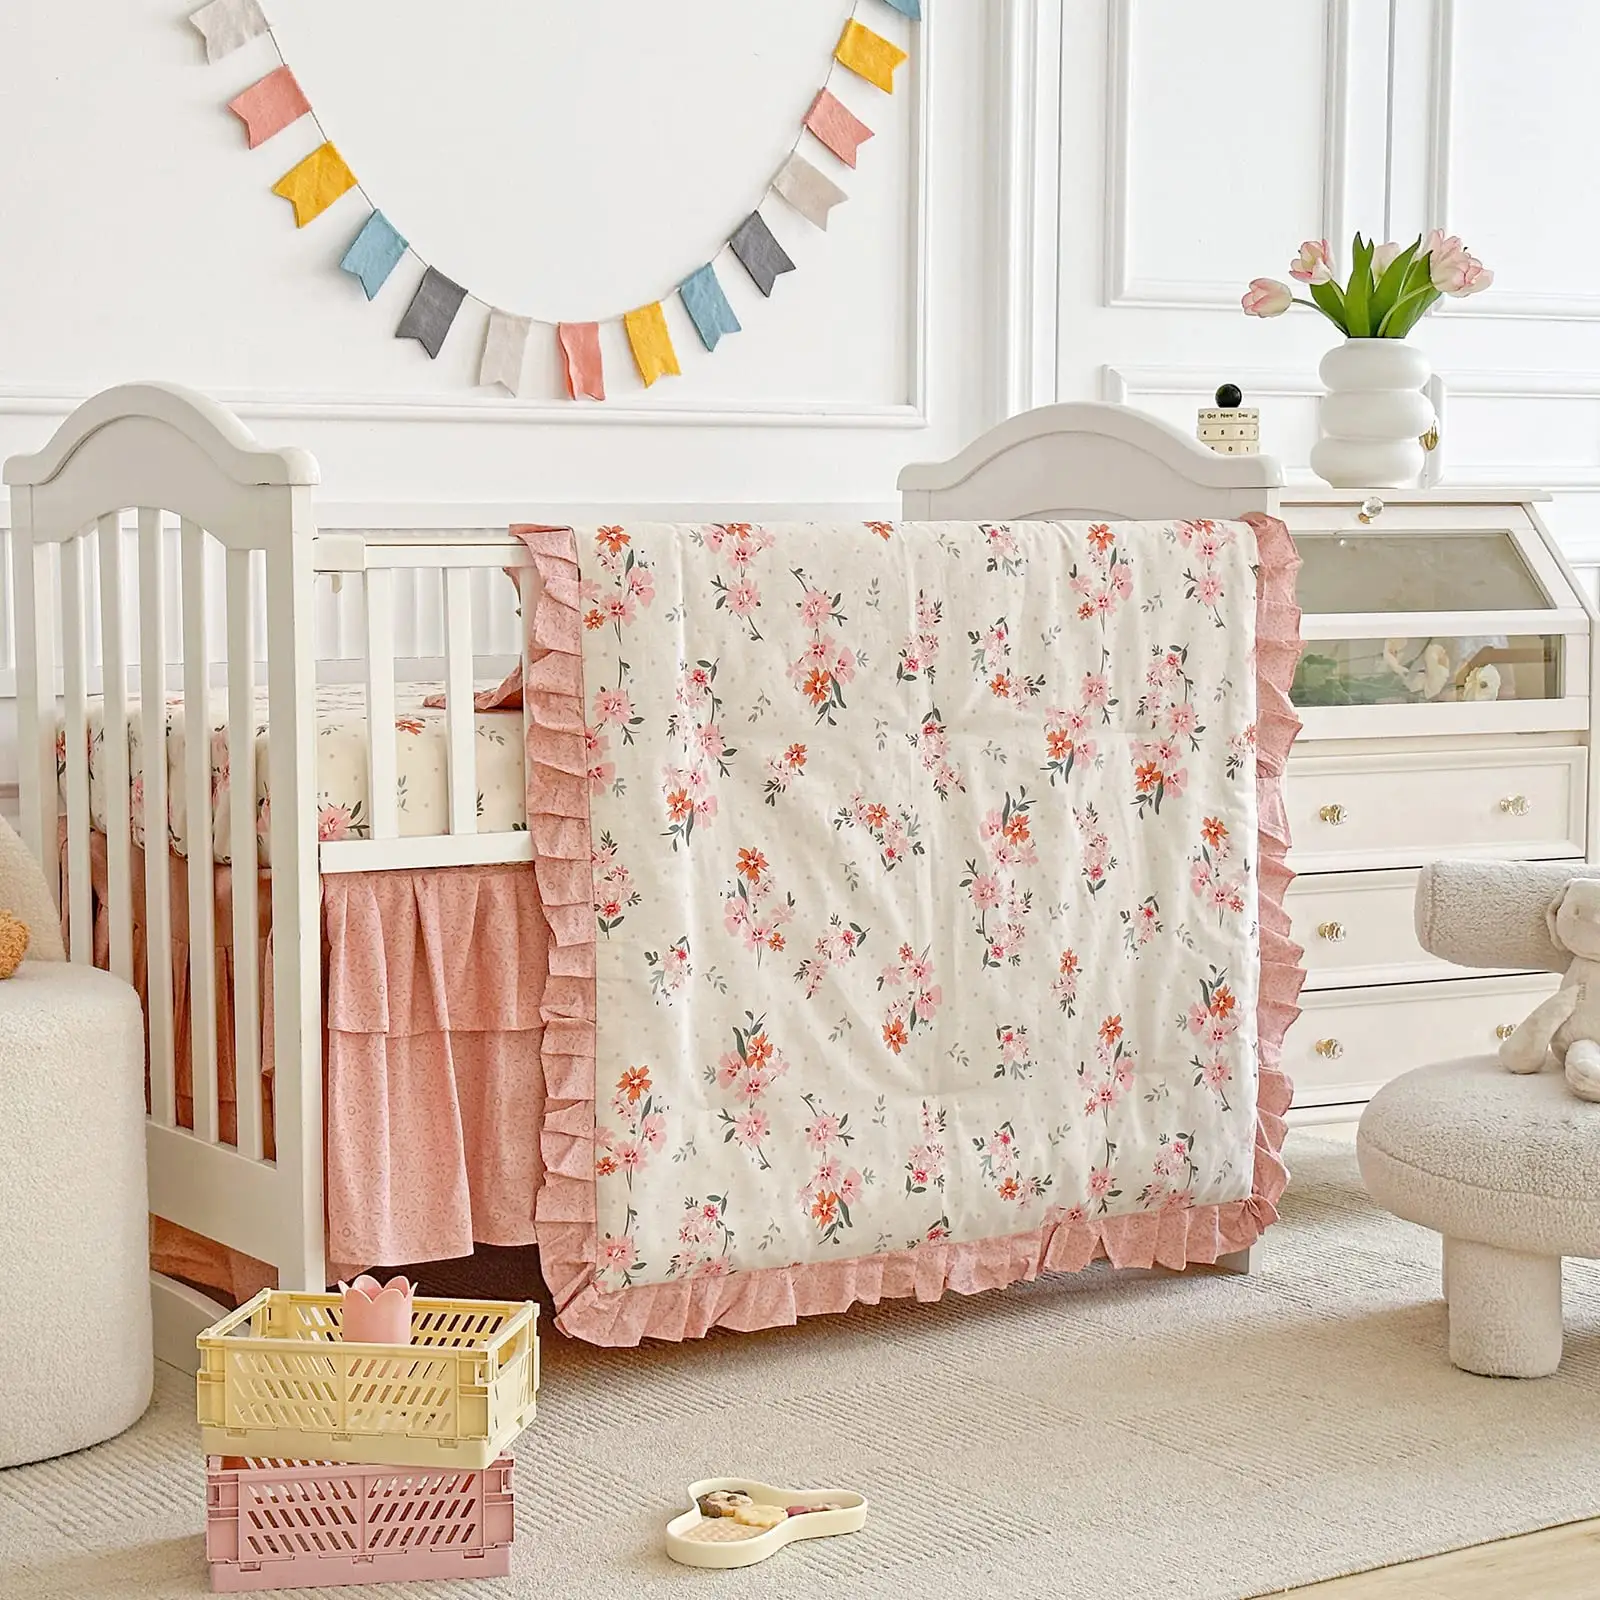 3 buah Set tempat tidur bayi selimut Floral, dengan seprai pas dan rok tempat tidur katun lipit